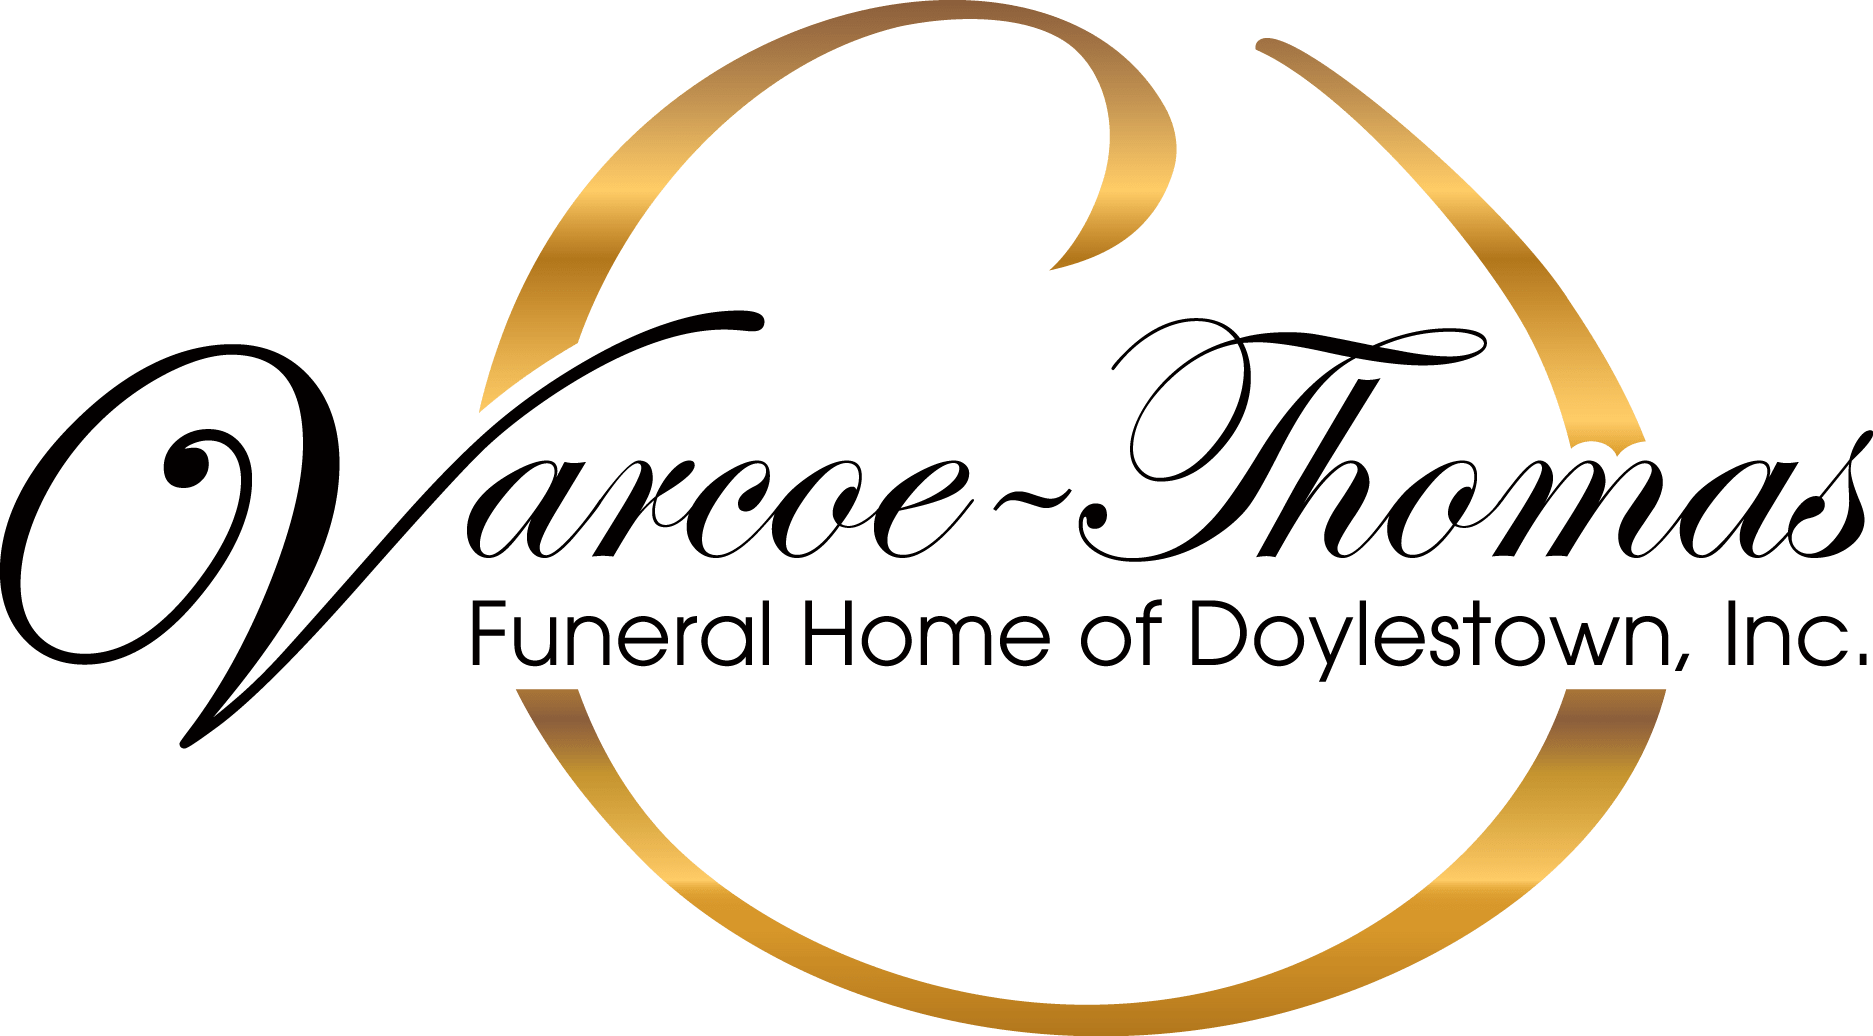 Varcoe-Thomas Funeral Home